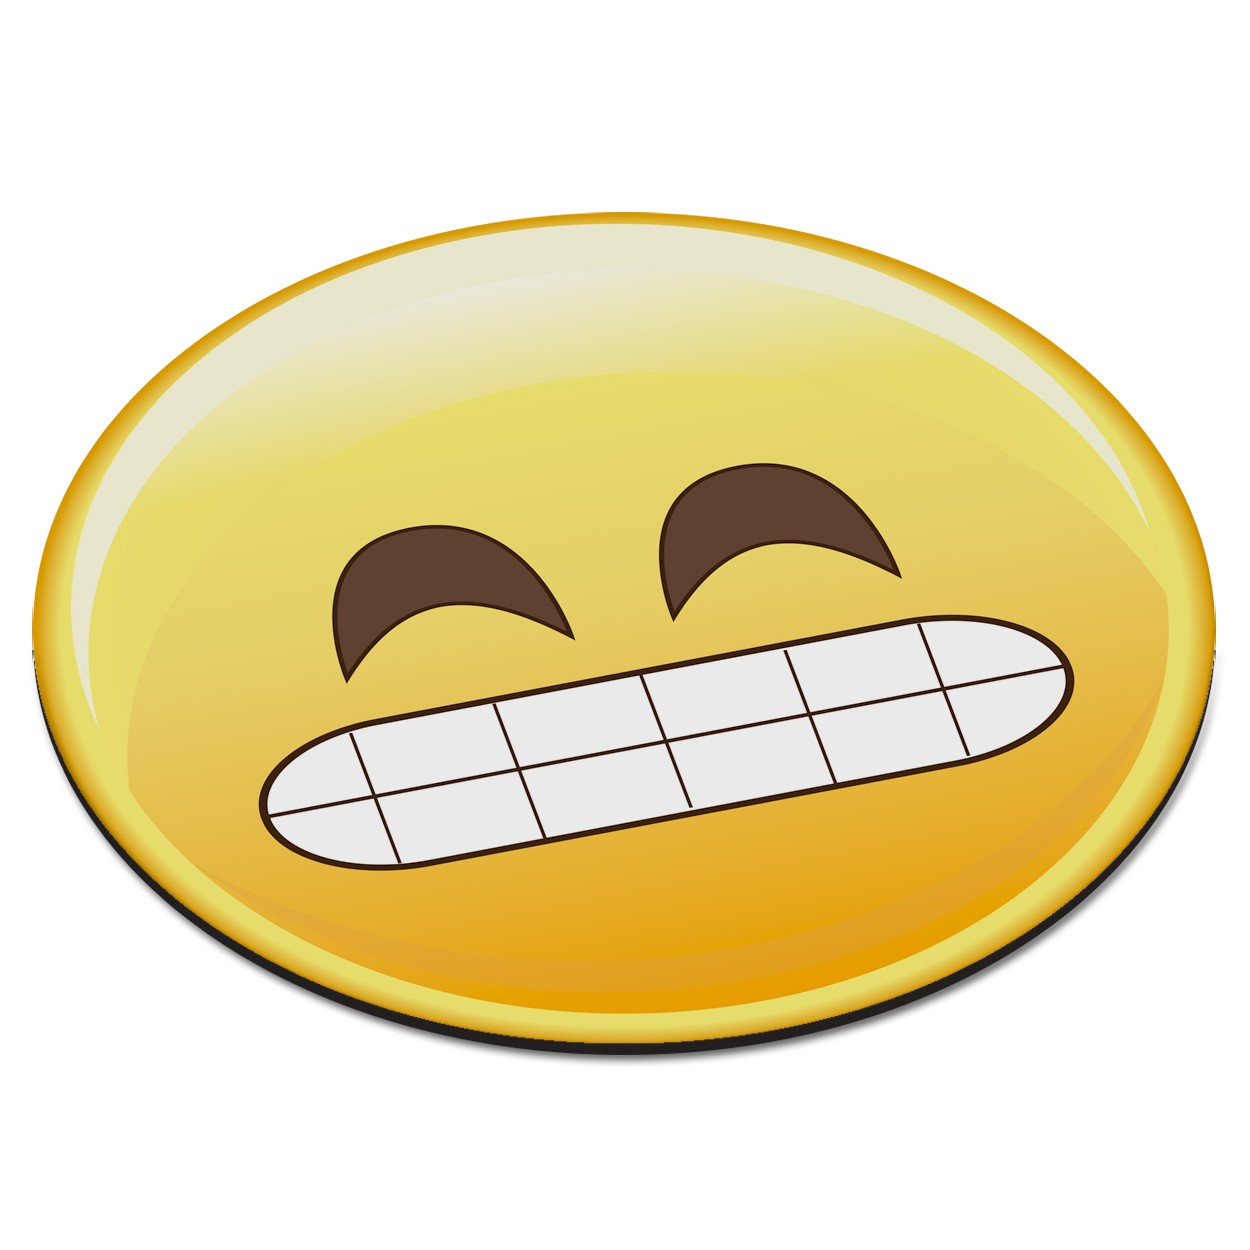 Emoji Awkward Face Teeth Circular PC Computer Mouse Mat Pad